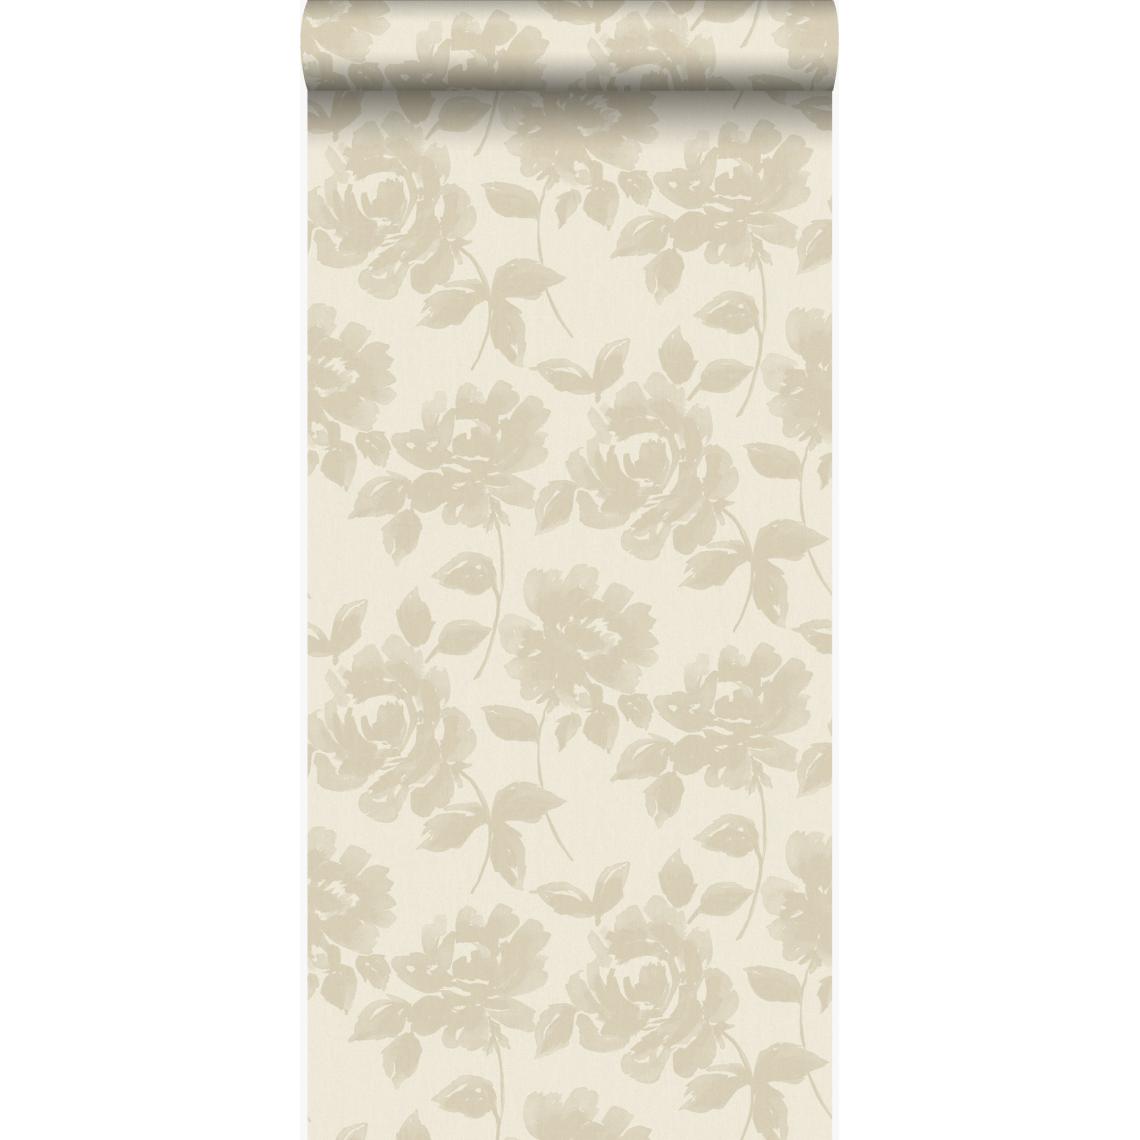 Origin - Origin papier peint roses beige crème - 347031 - 53 cm x 10,05 m - Papier peint